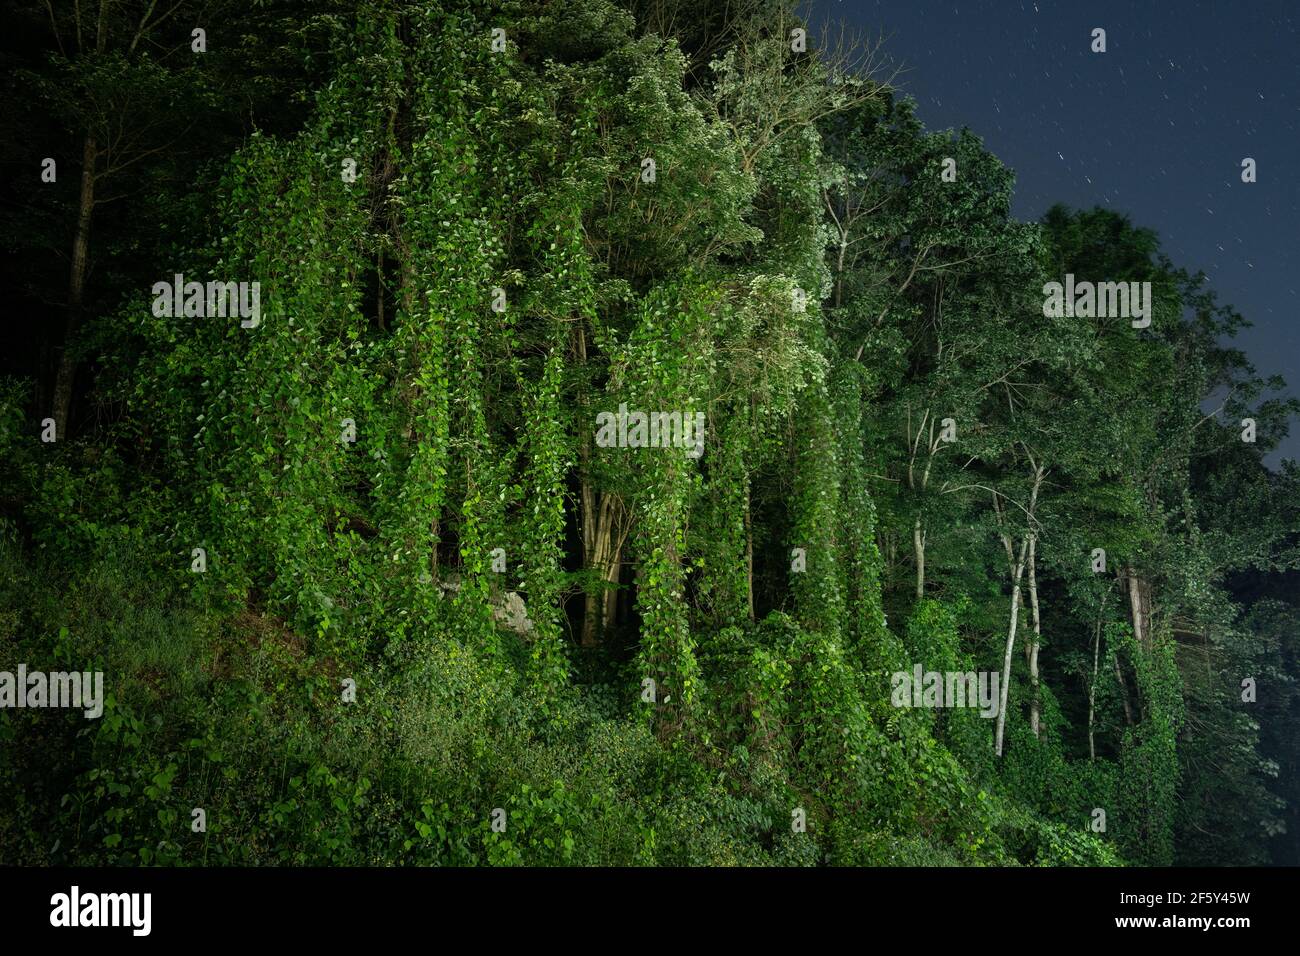 Kudzu Consuming Forest in South, Illuminated at Night Stock Photo